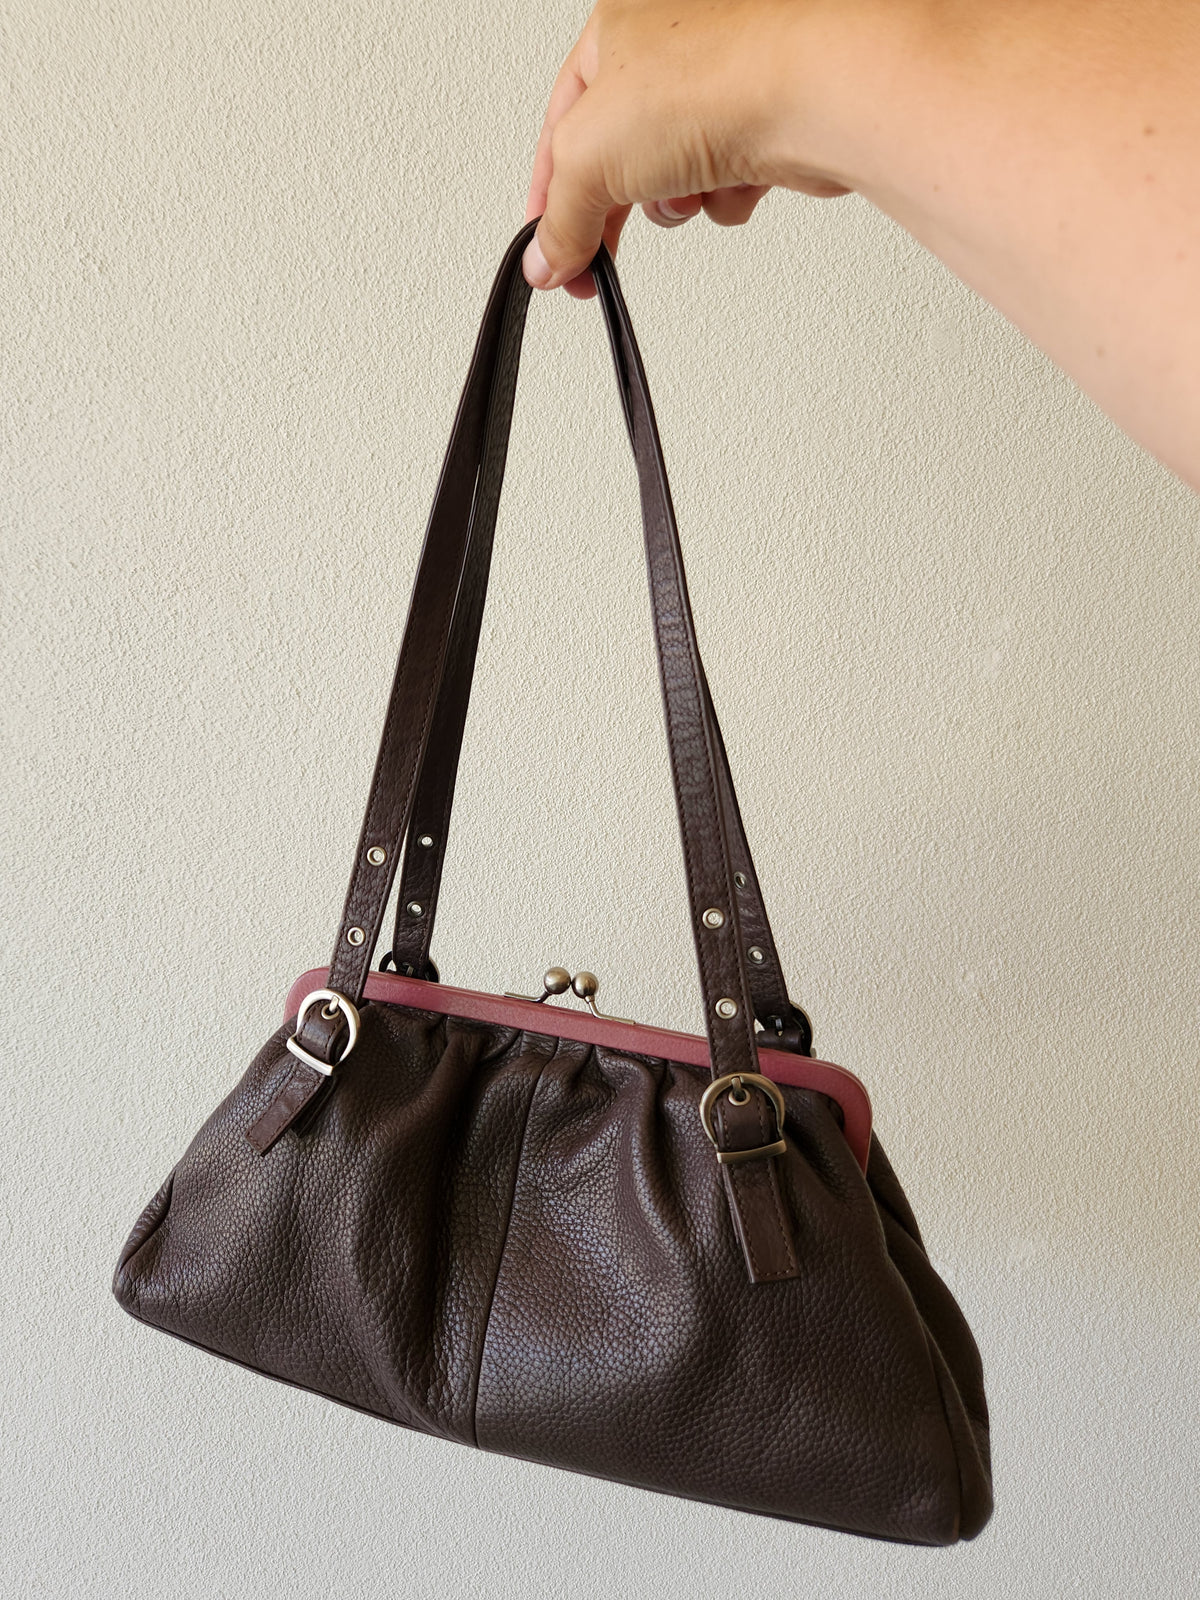 Autograph Brown leather clasp handbag